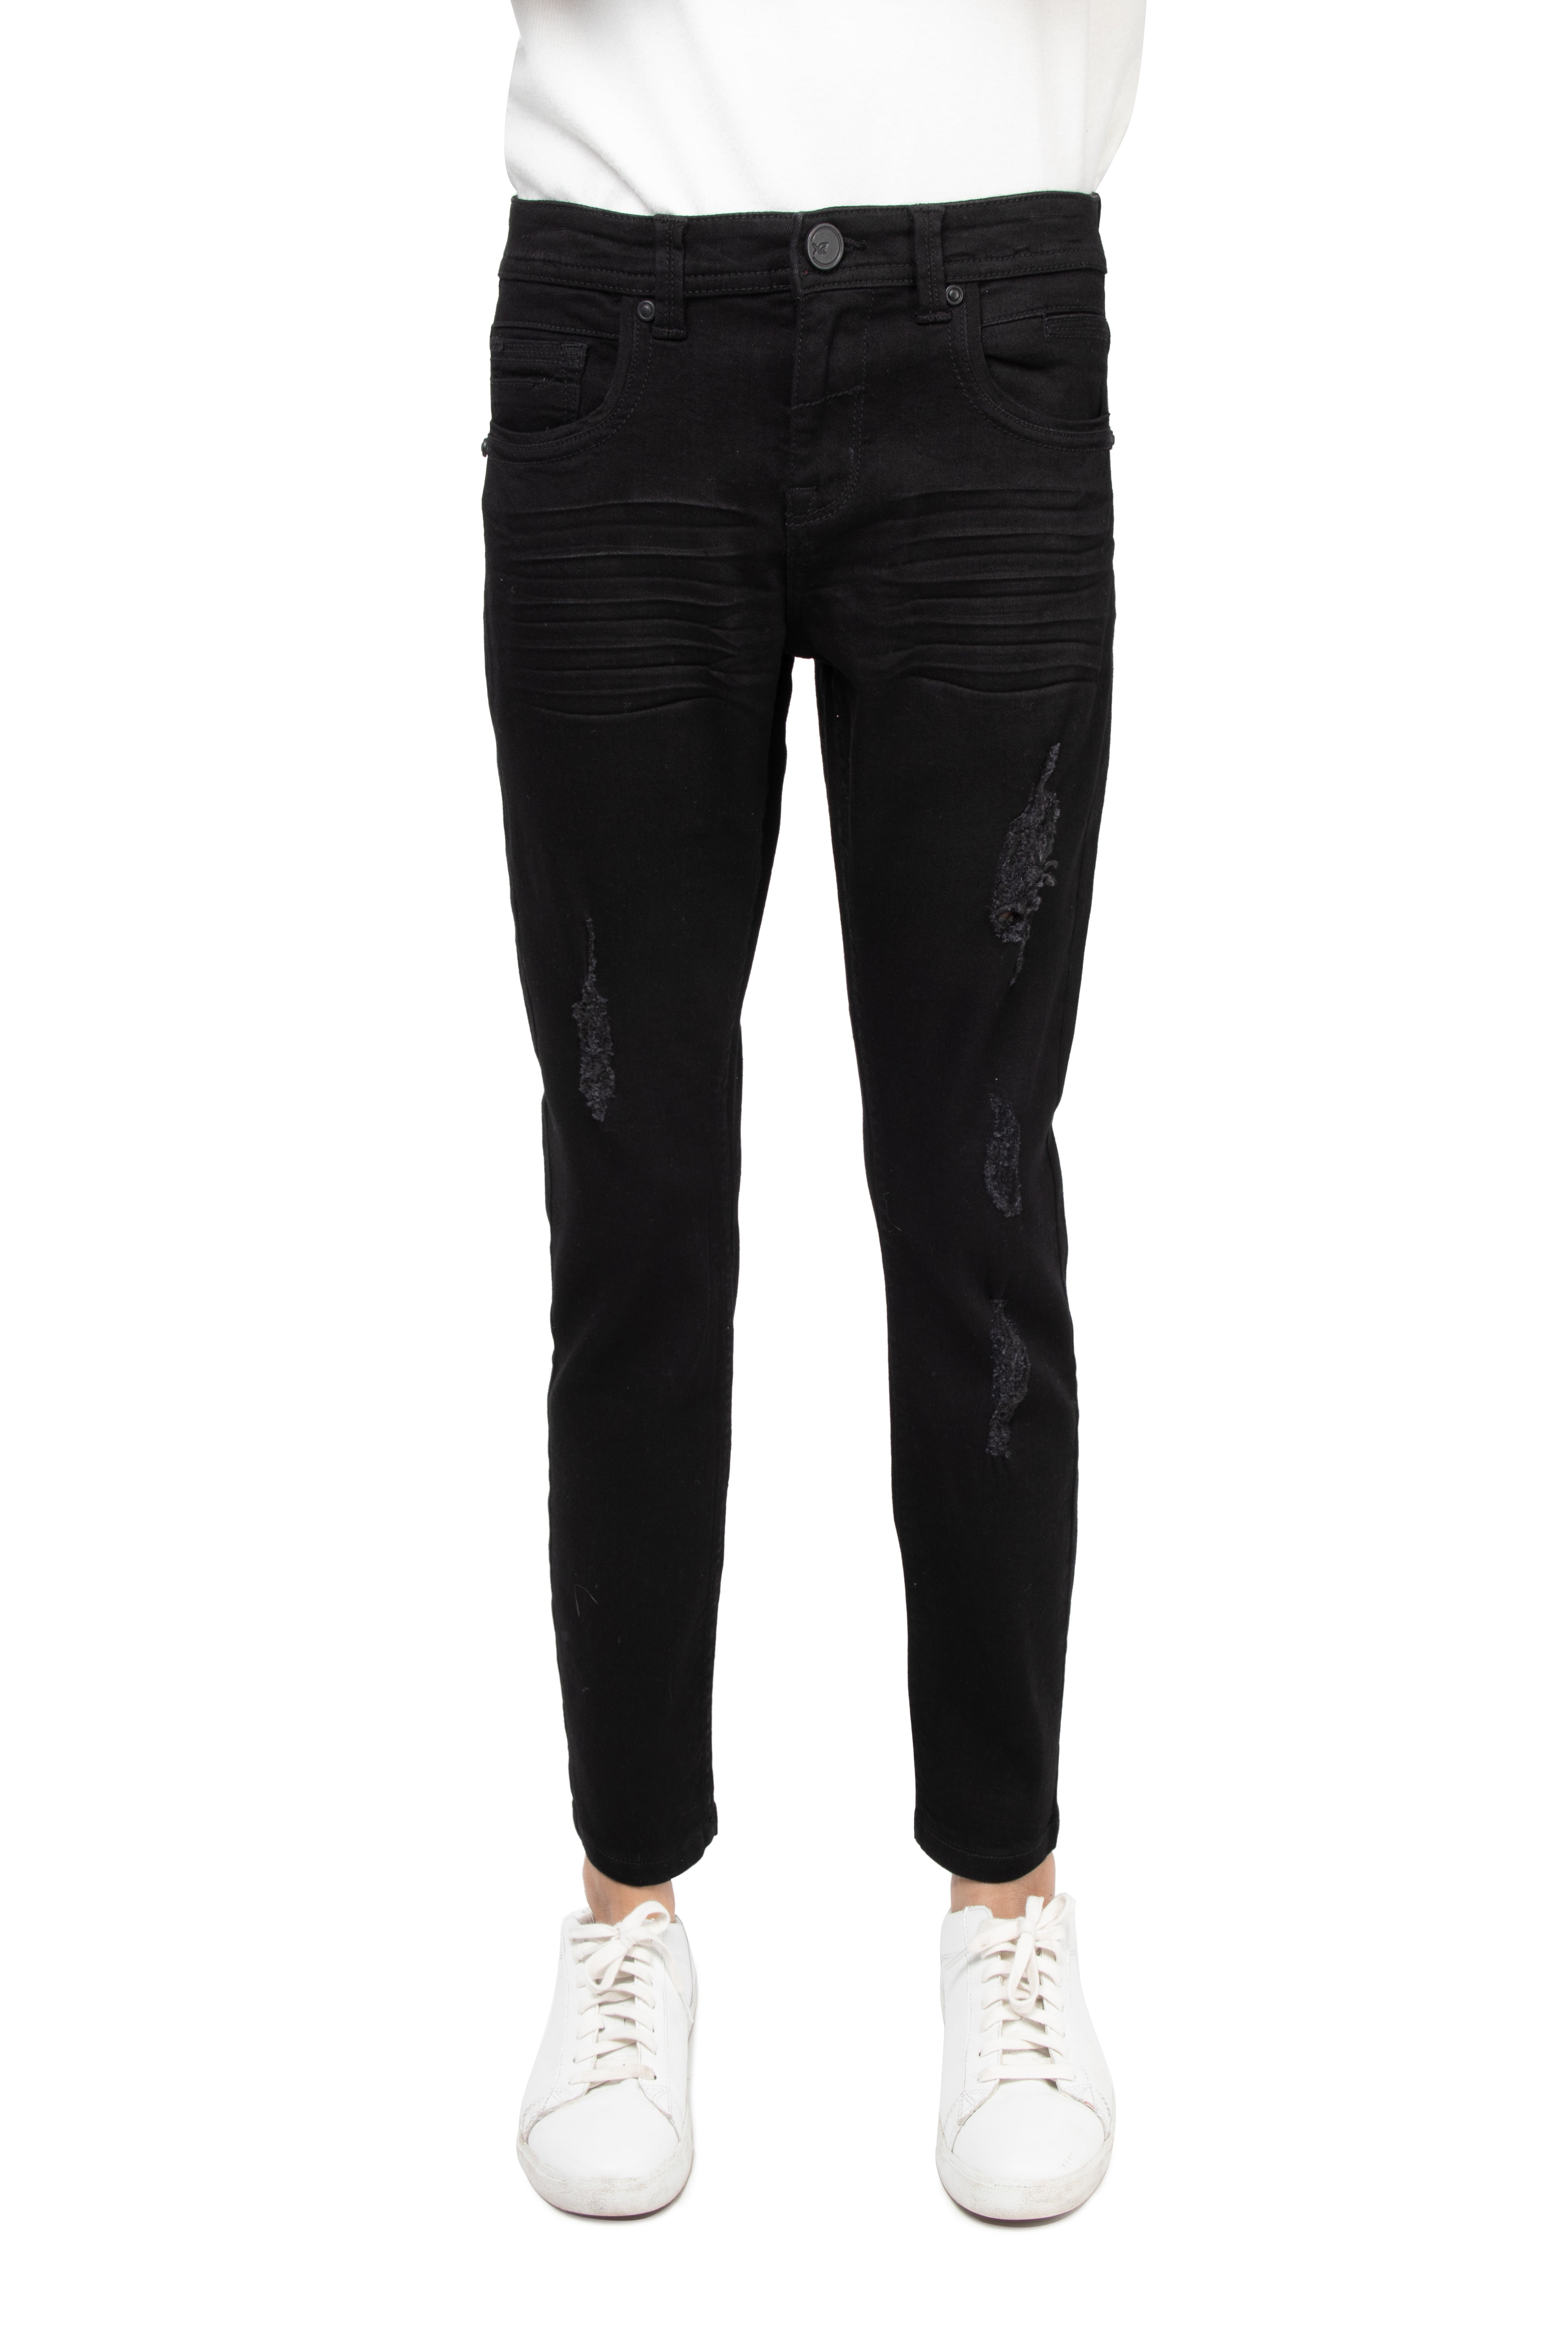 Helt vildt Rute Intim X RAY Skinny Jeans for Boys Slim Fit Denim Pants, Jet Black - Minor Rips,  Size 14 - Walmart.com